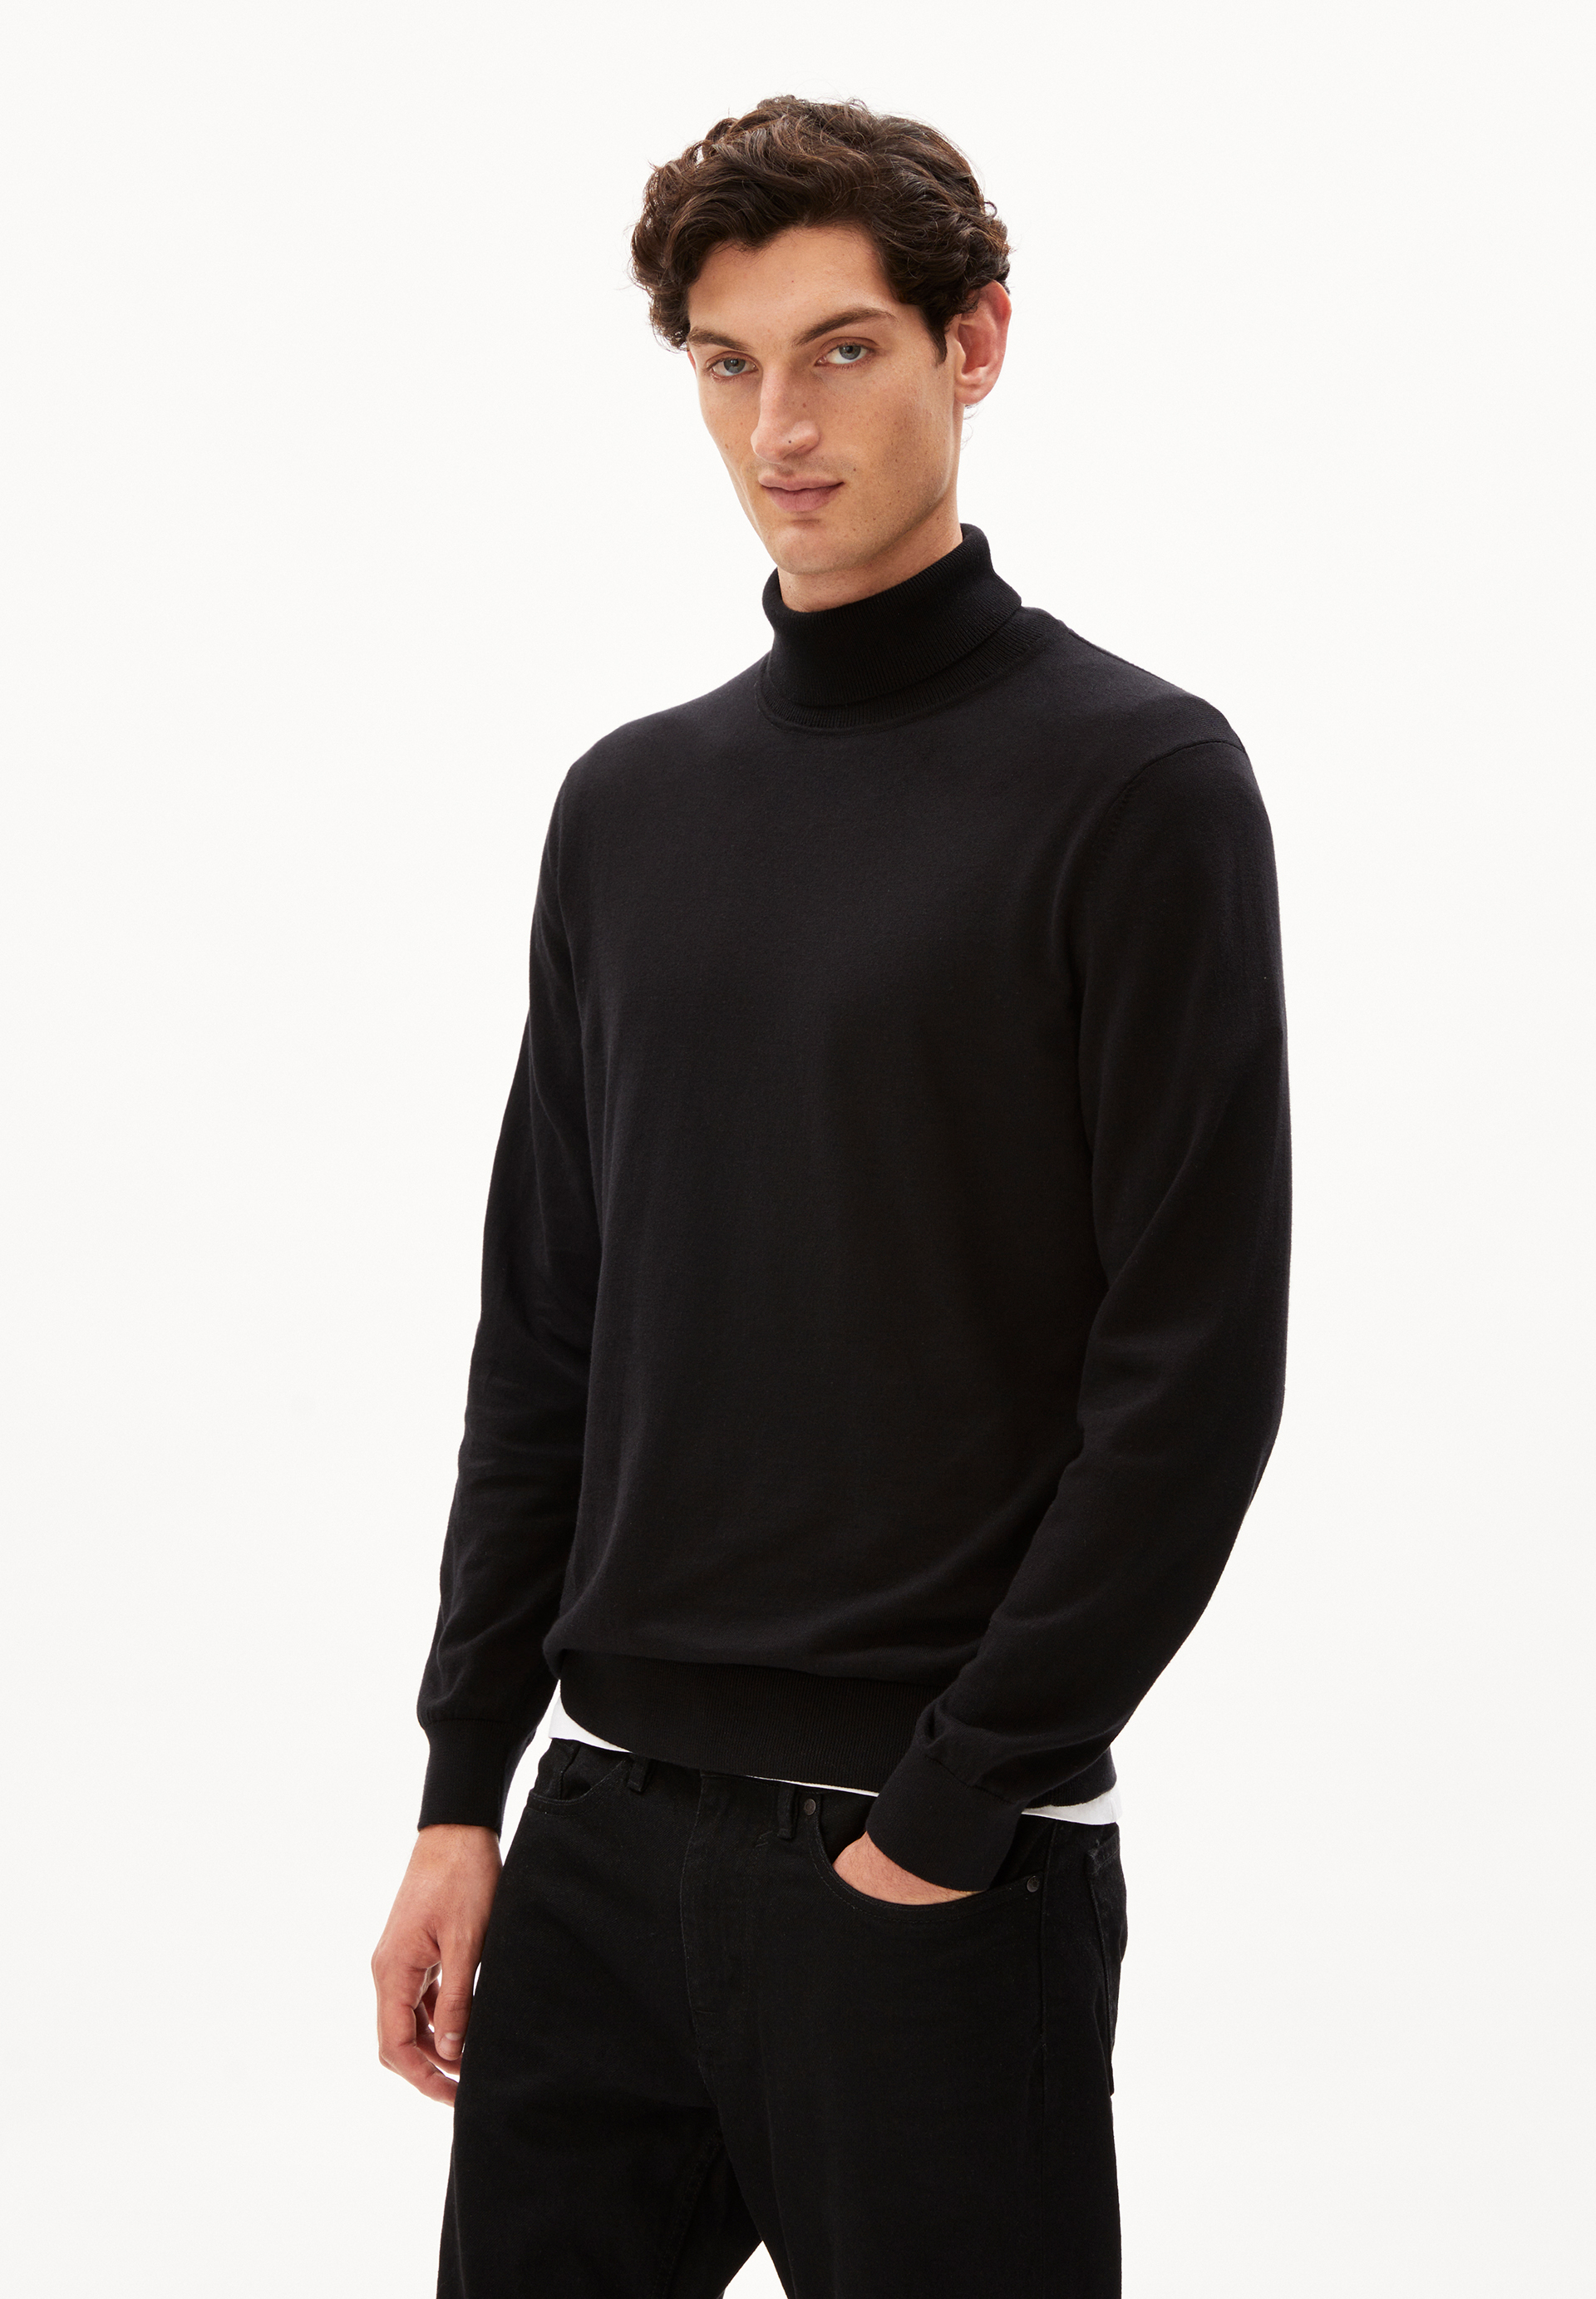 GLAANUS Sweater Regular Fit made of Organic Cotton